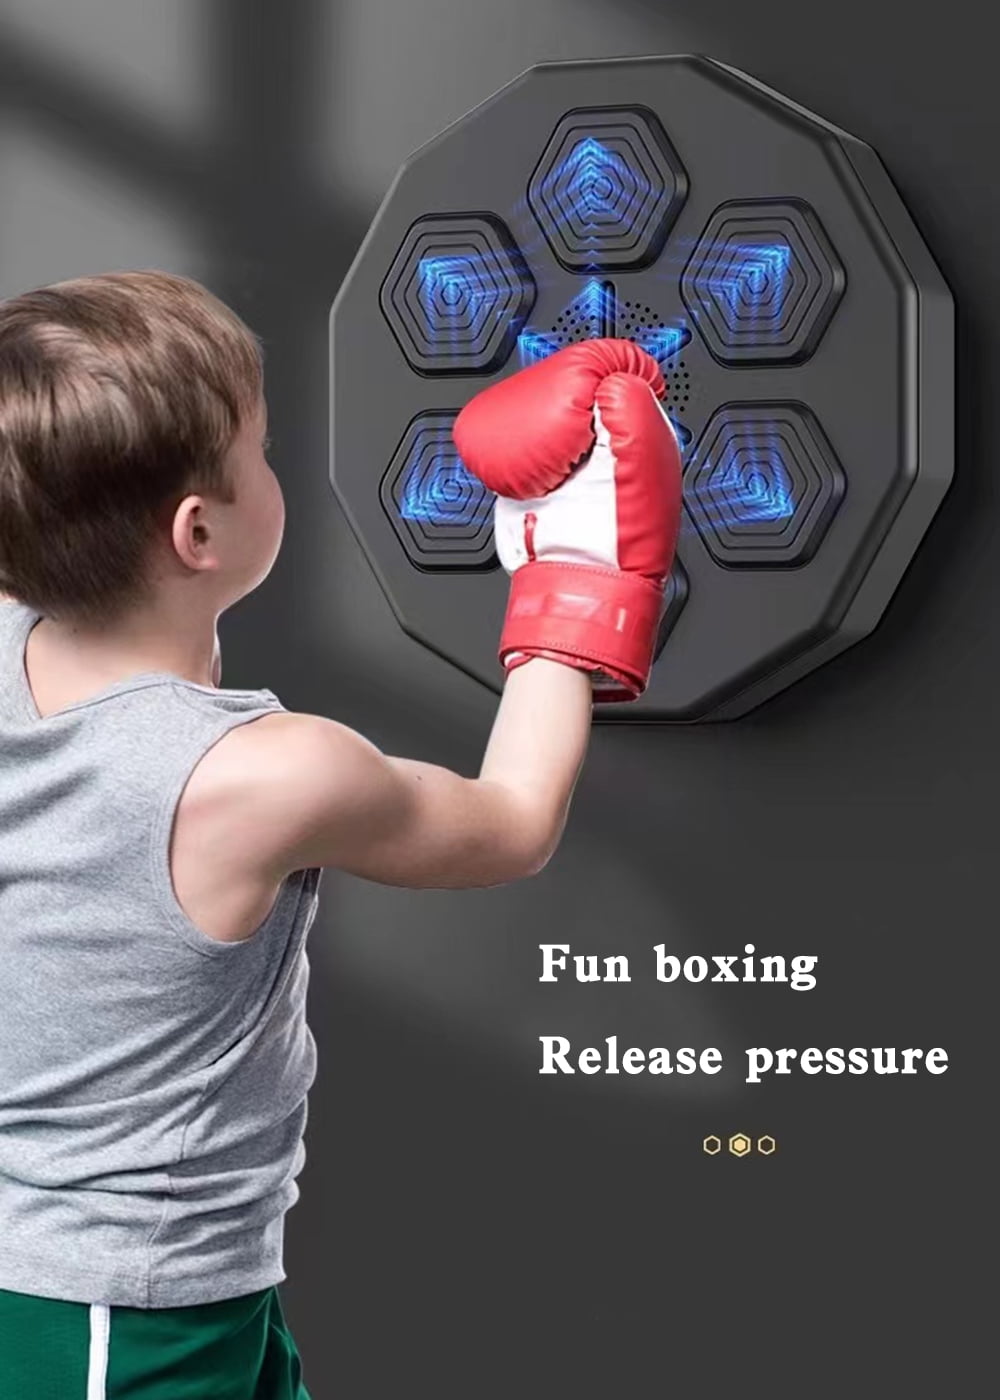 FAJOME Target Boxing Machine, Wall-Mounted Bluetooth Music Boxing